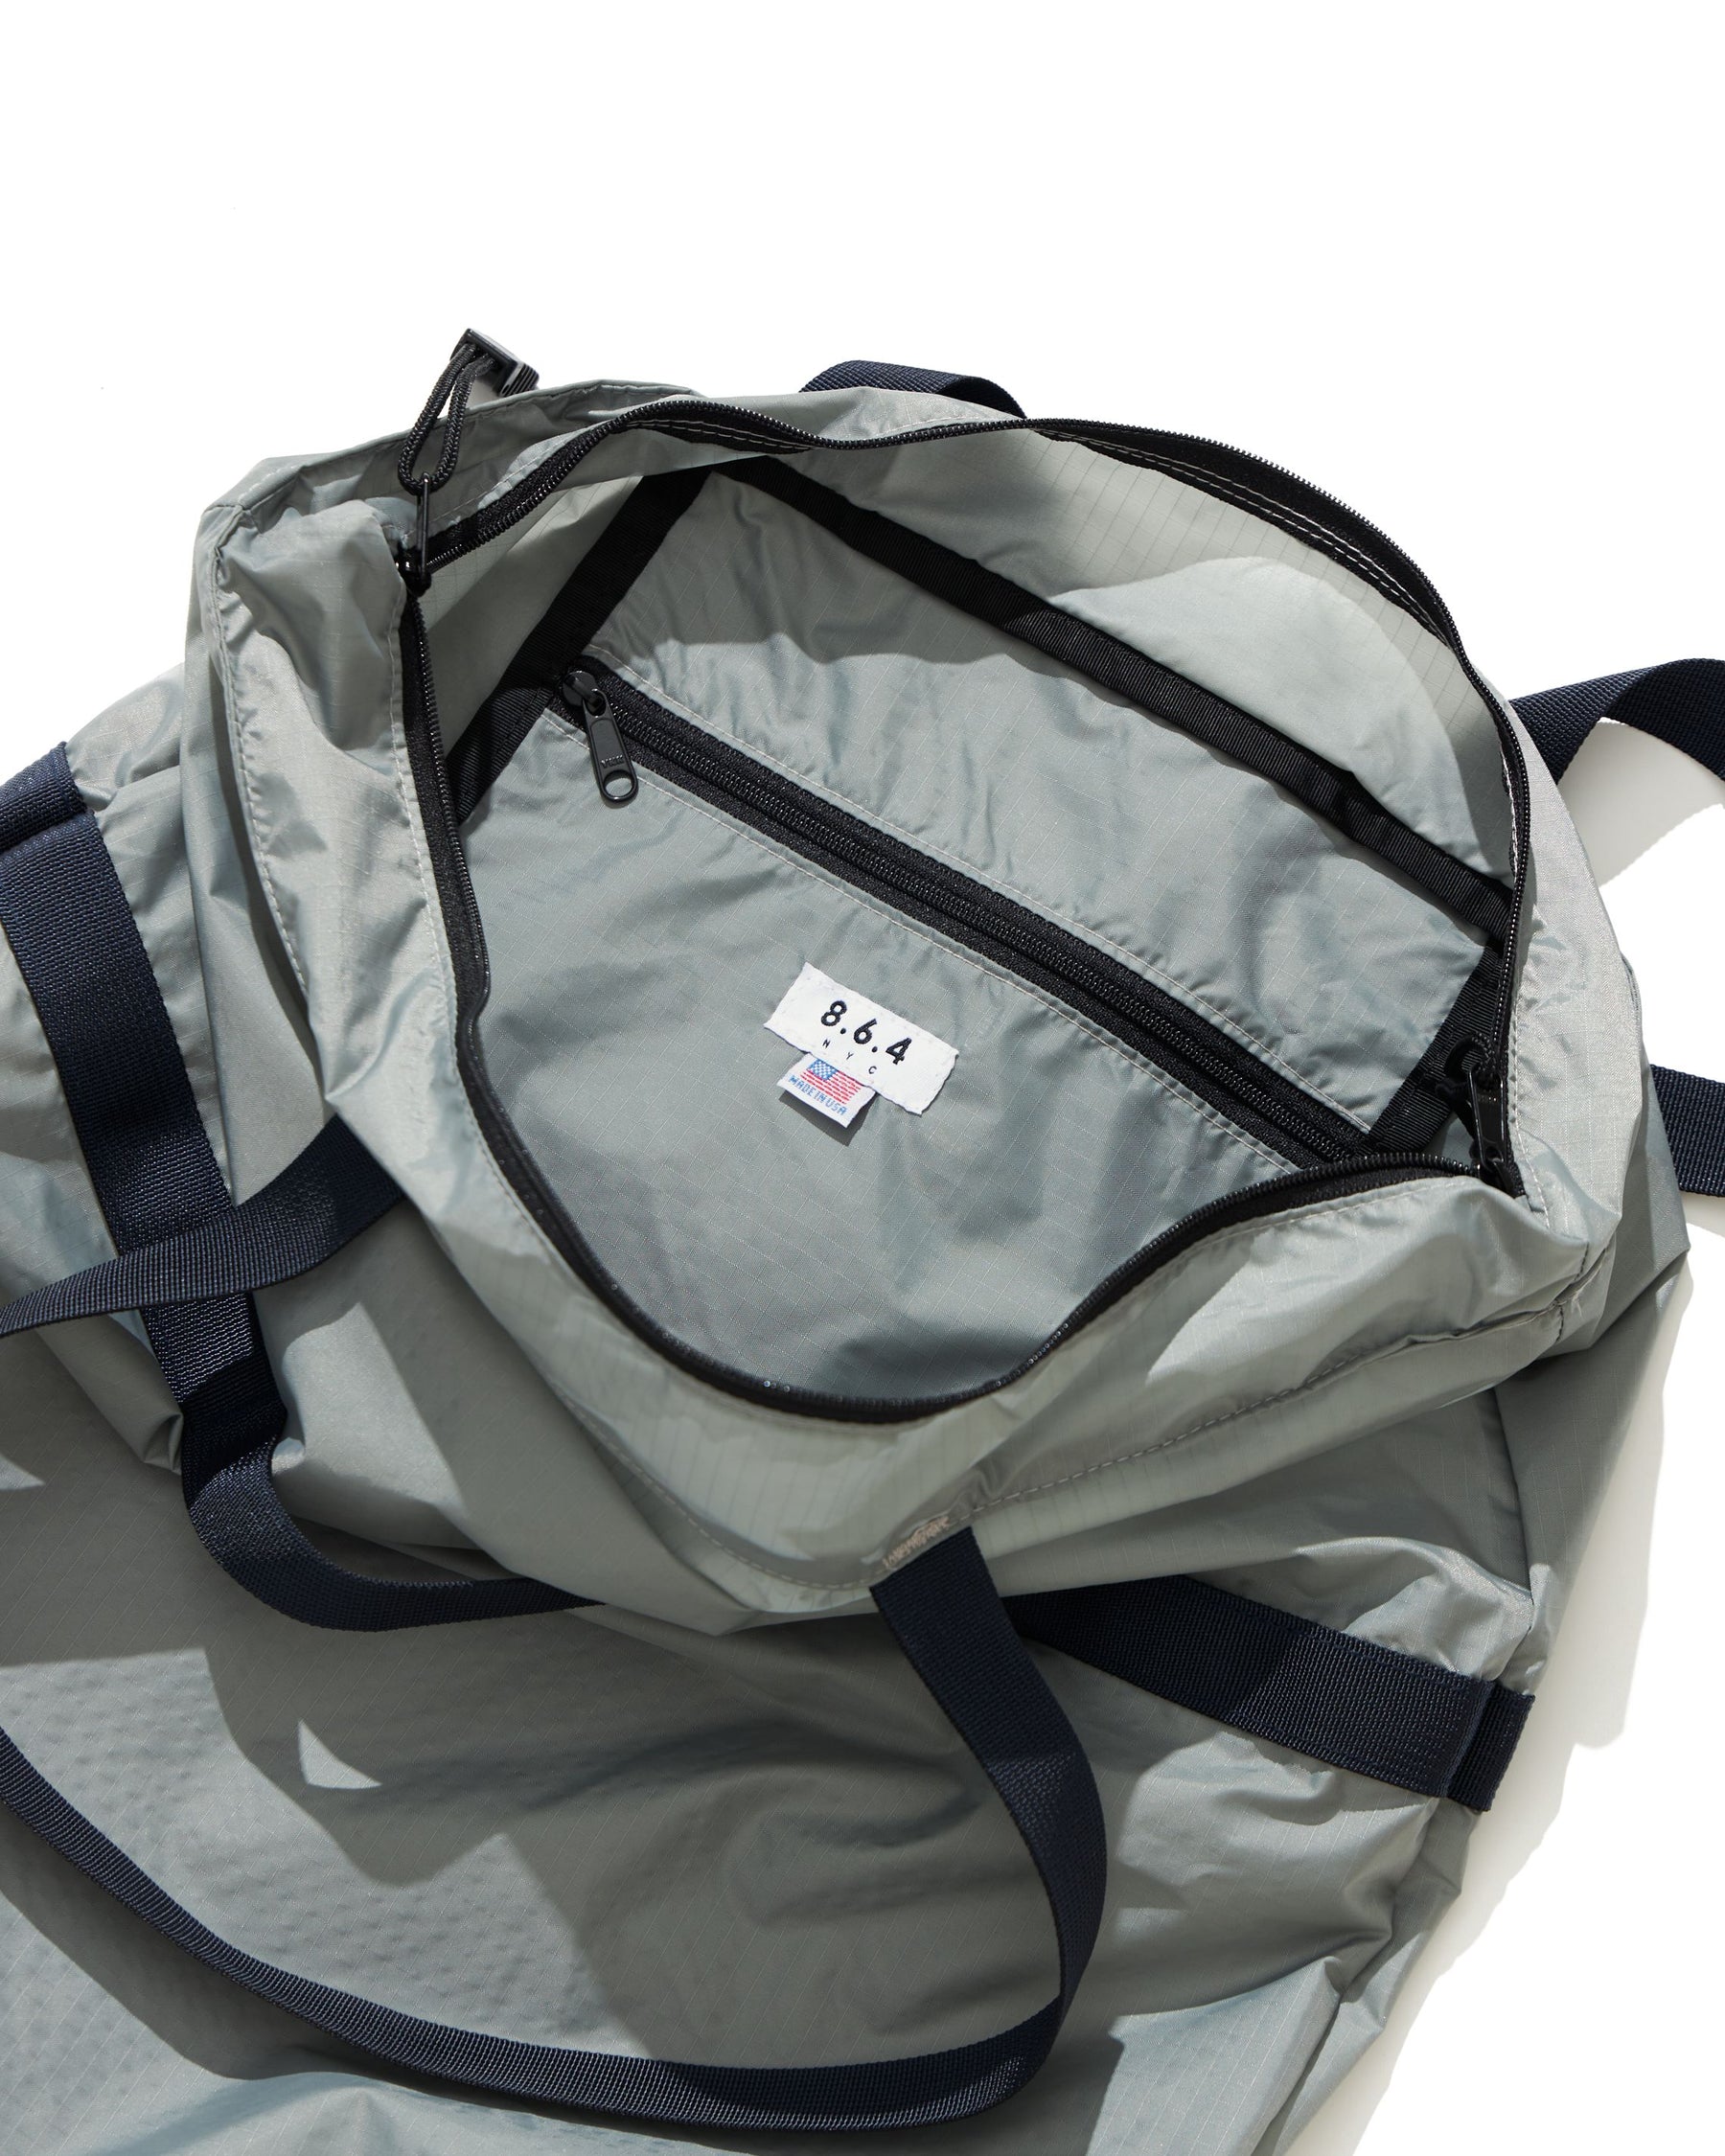 Nylon 2 Way Bag in Grey/Navy